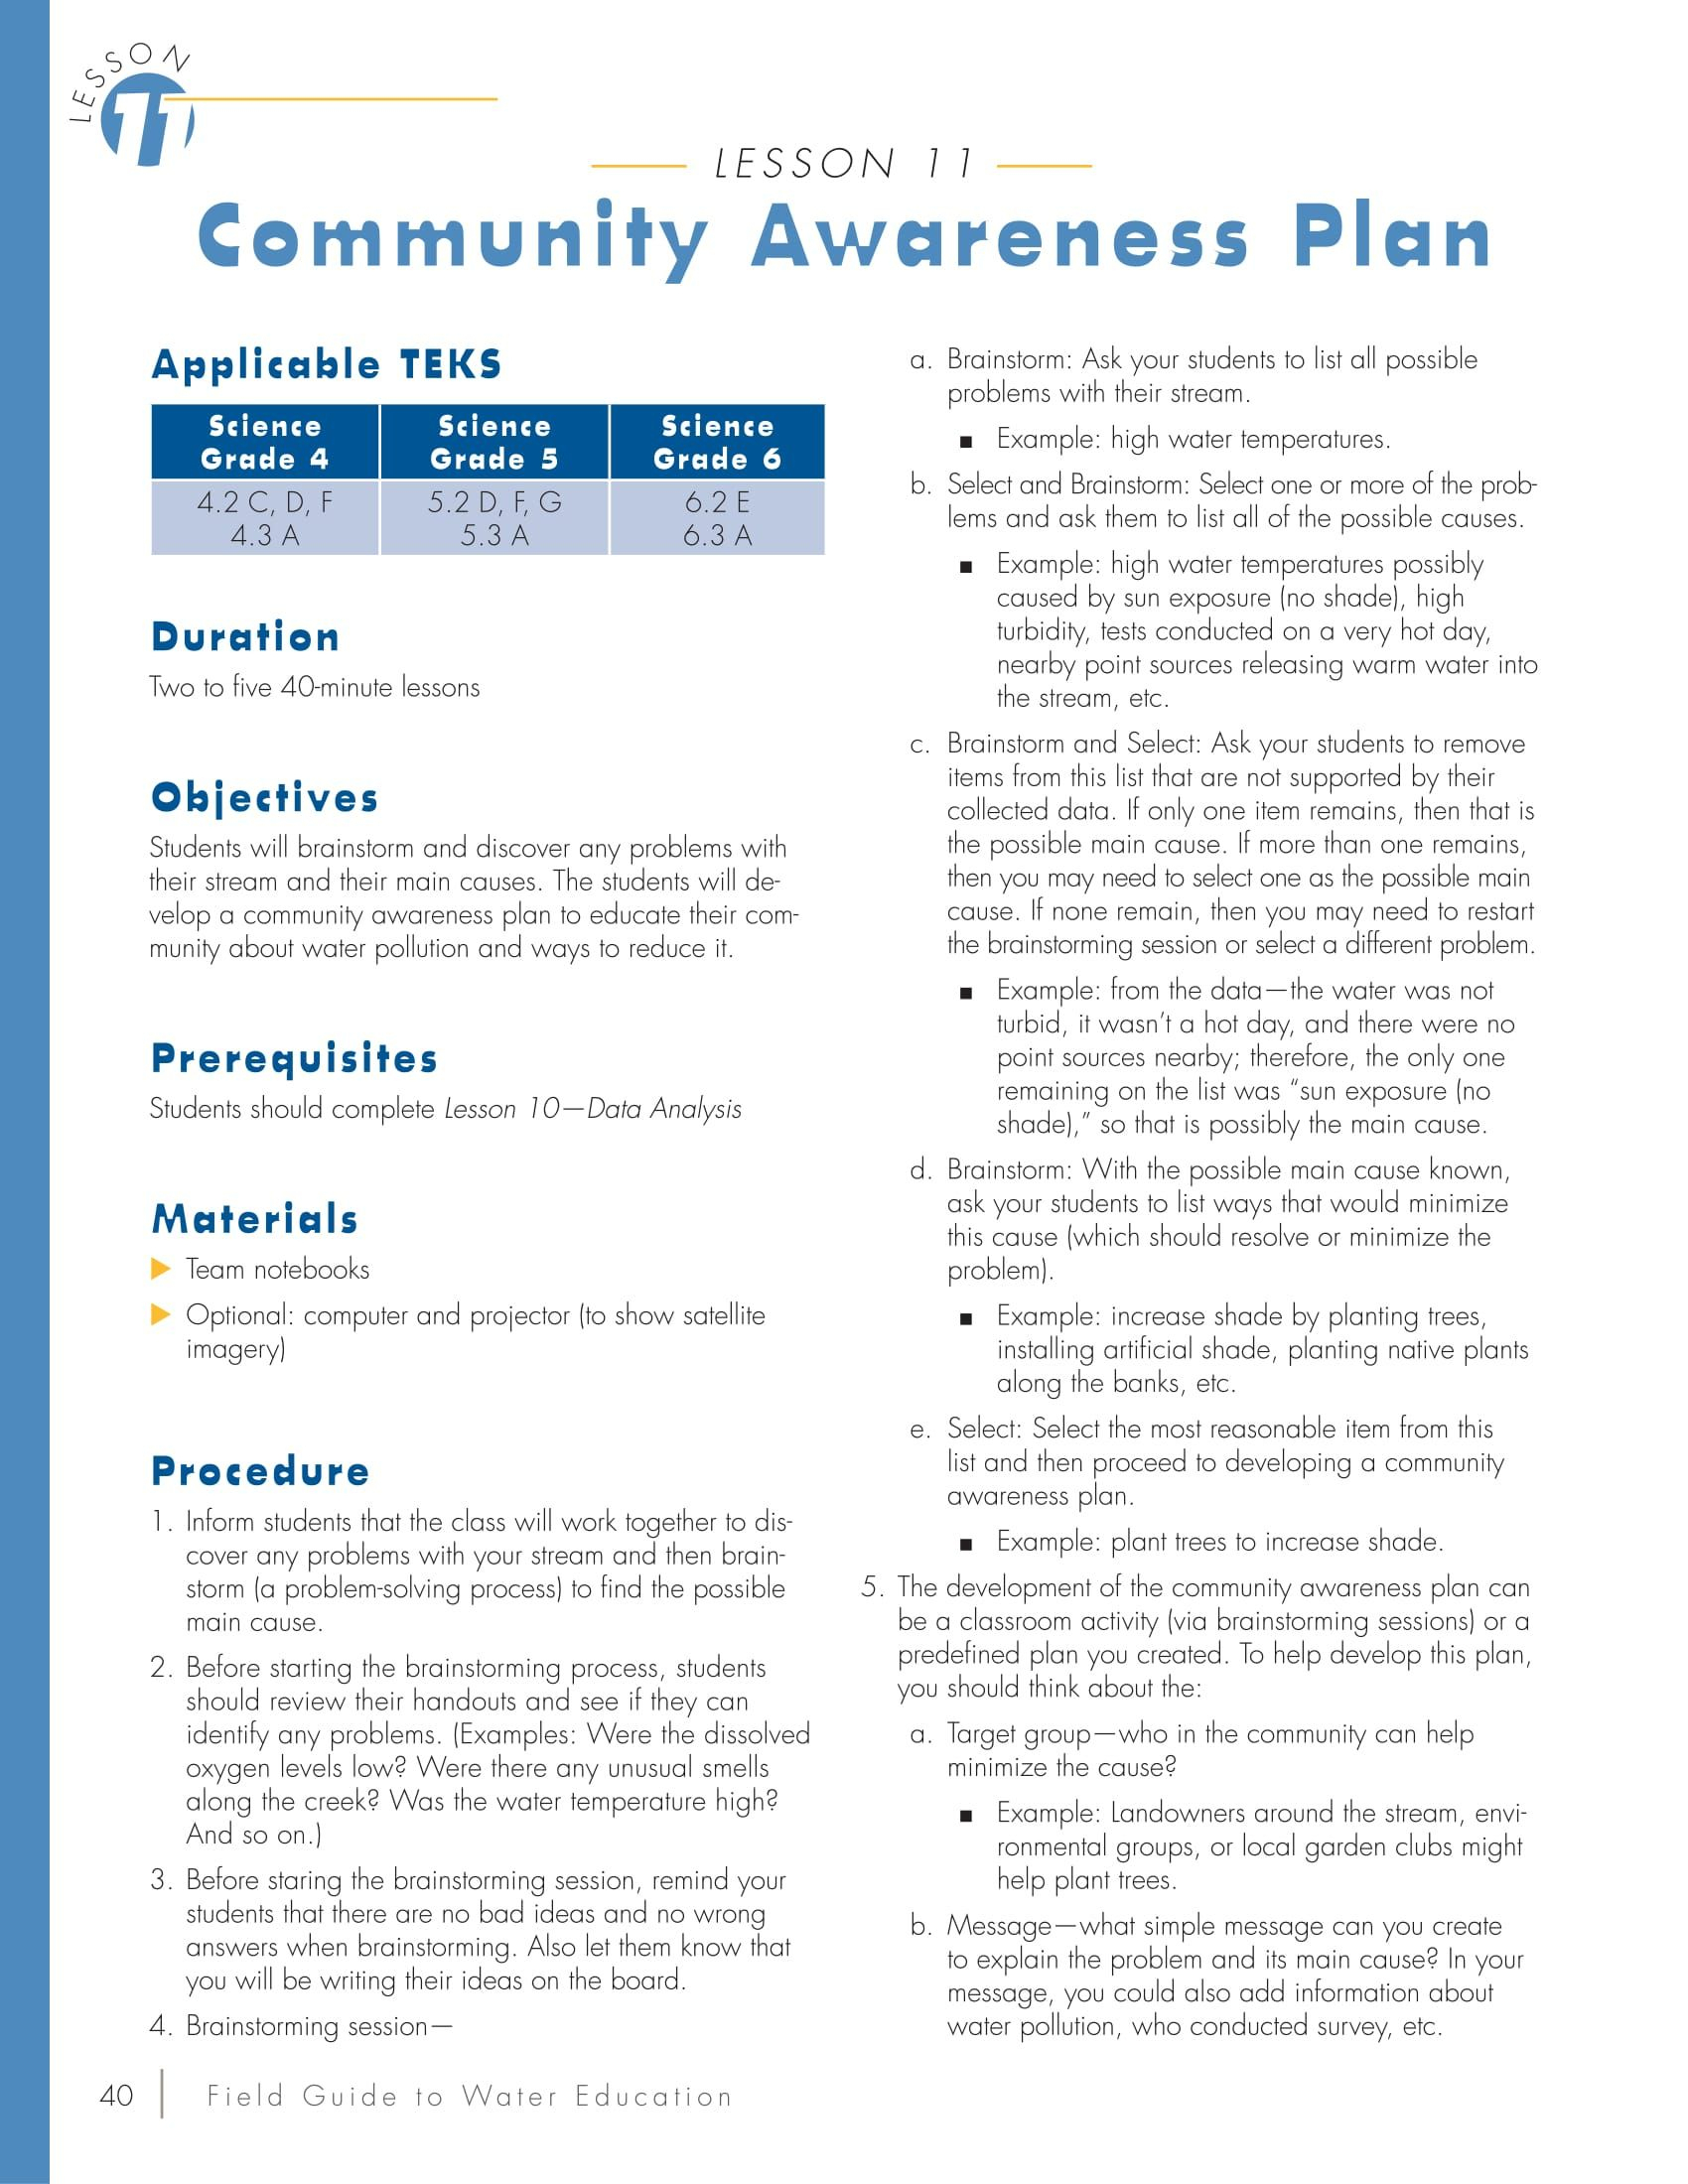 Community Awareness Plan Lesson Plan | Education Lesson